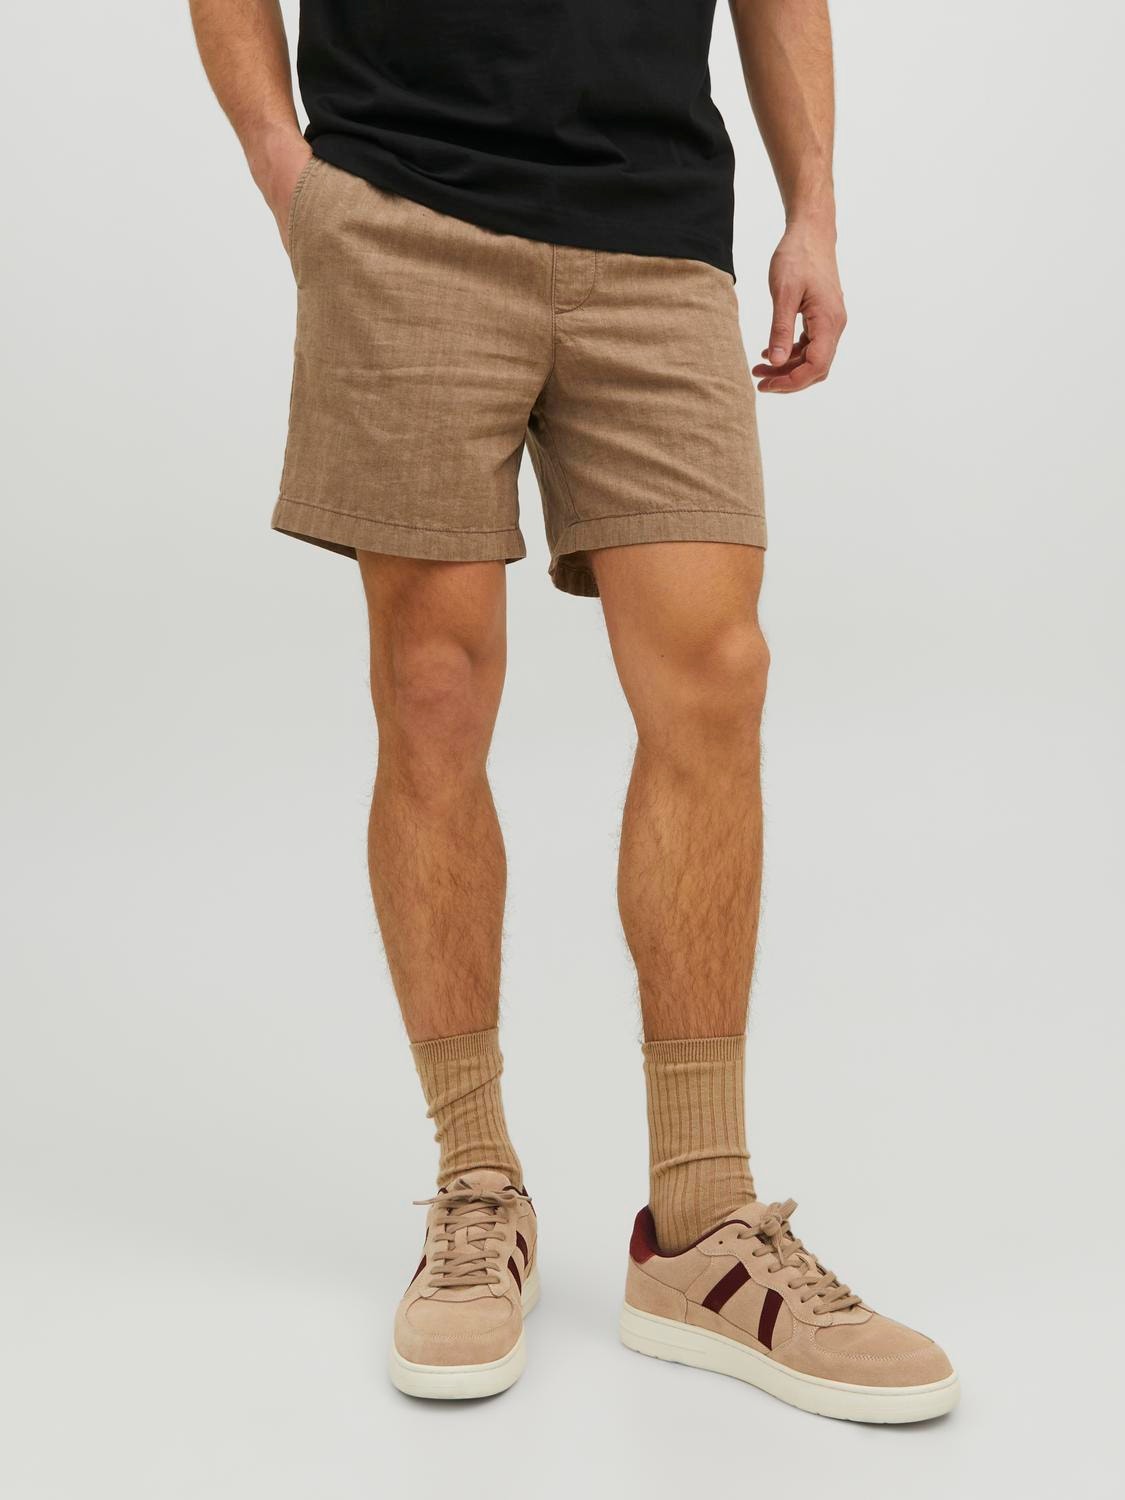 Jack & Jones Regular Fit Jogger shorts -Falcon - 12234596